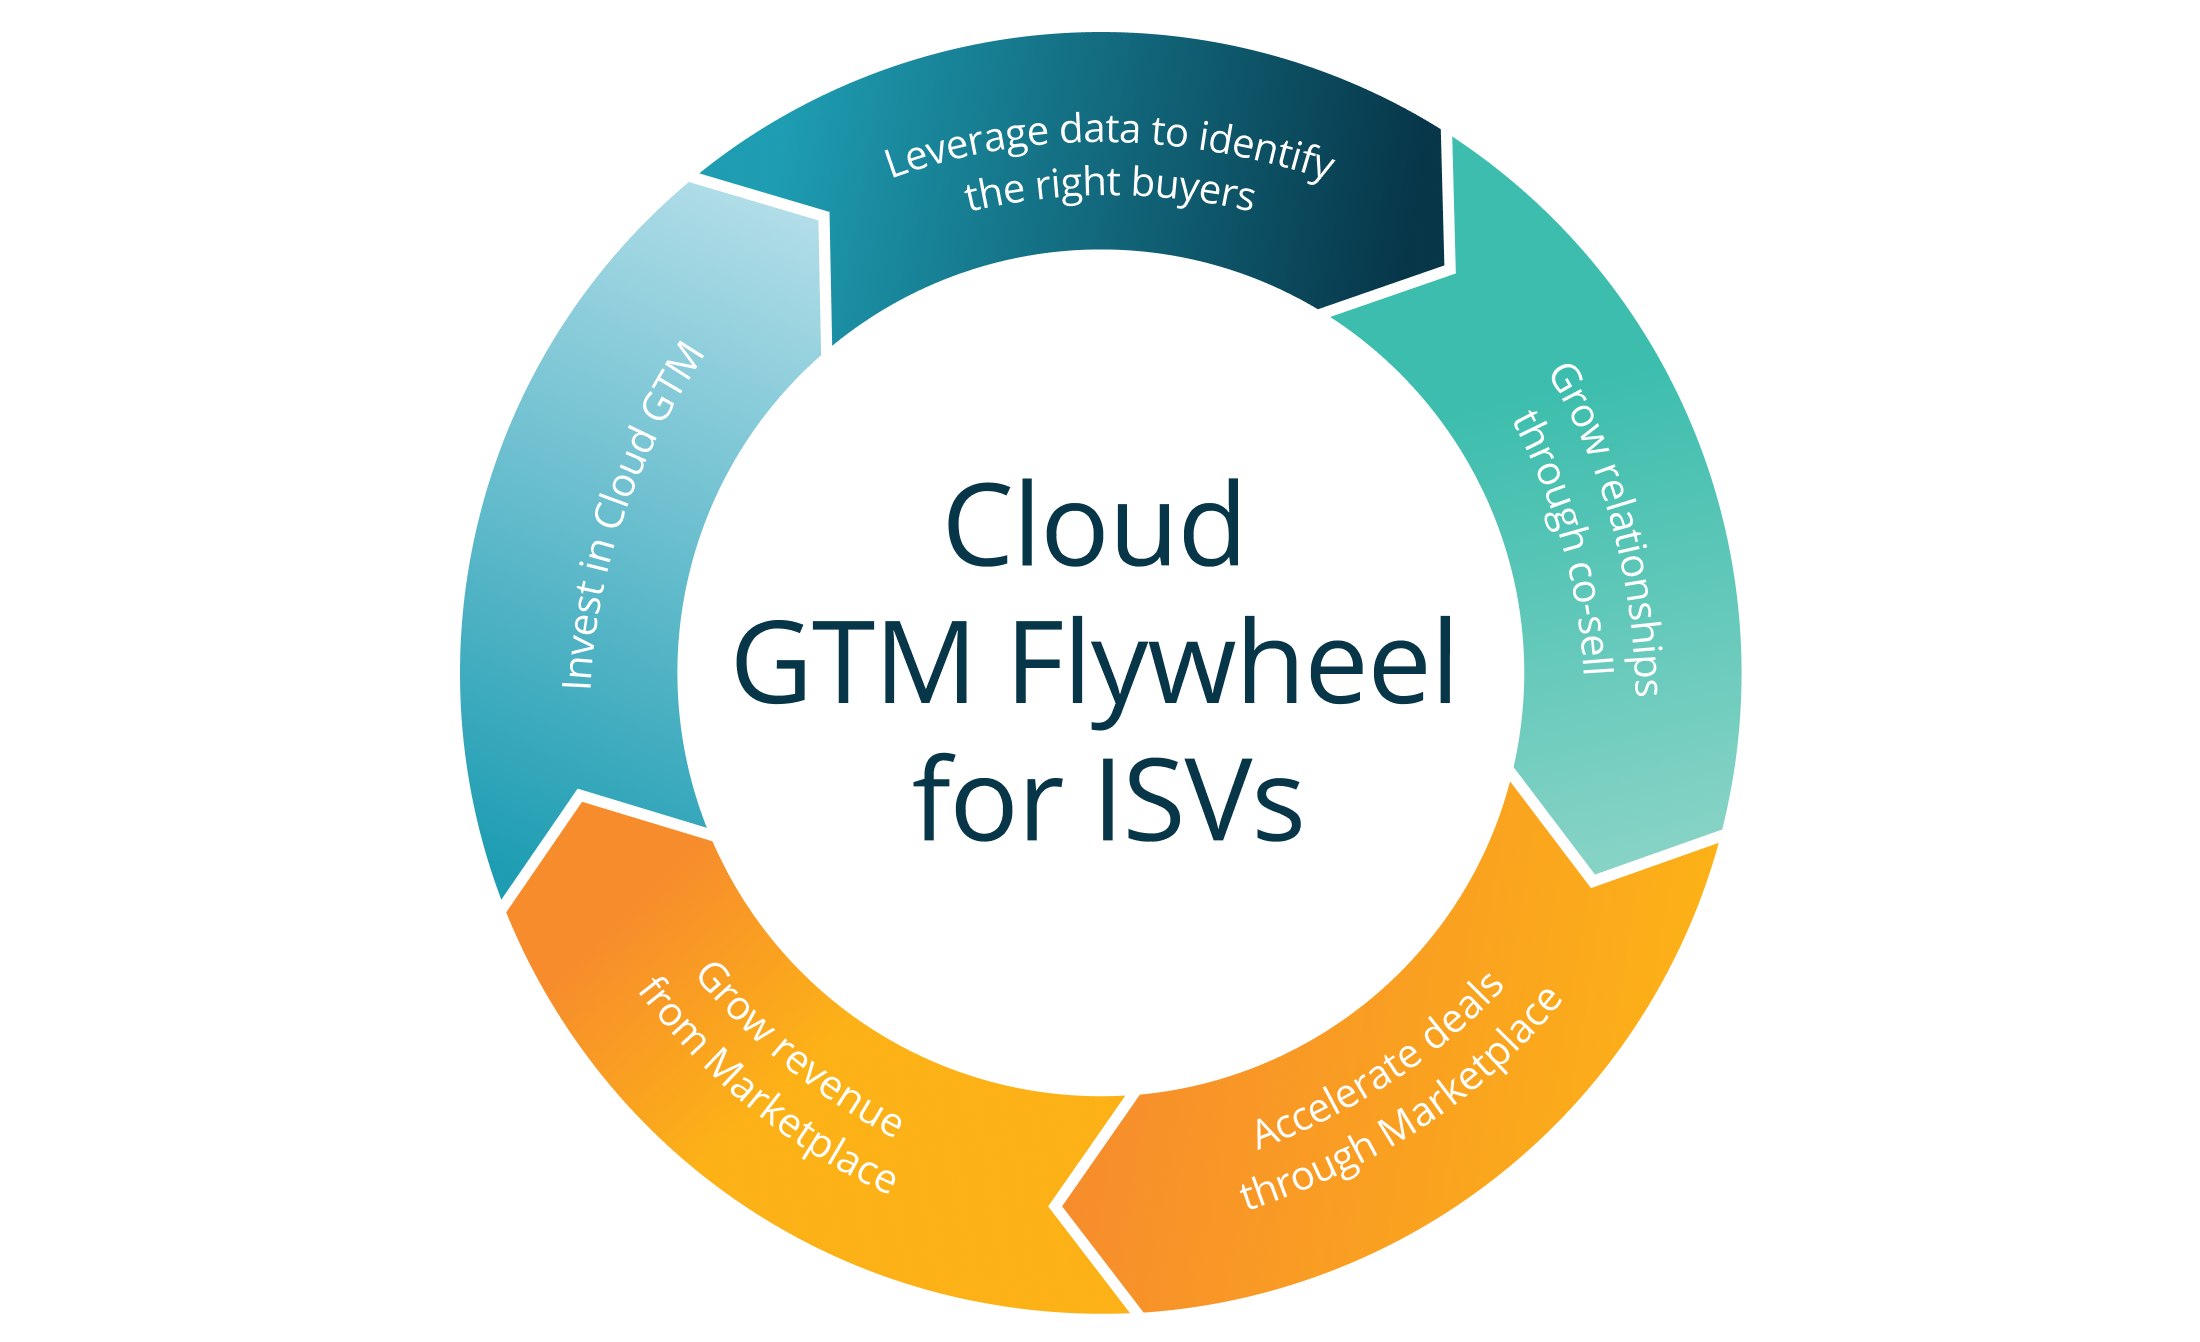  Cloud GTM Flywheel for ISV's